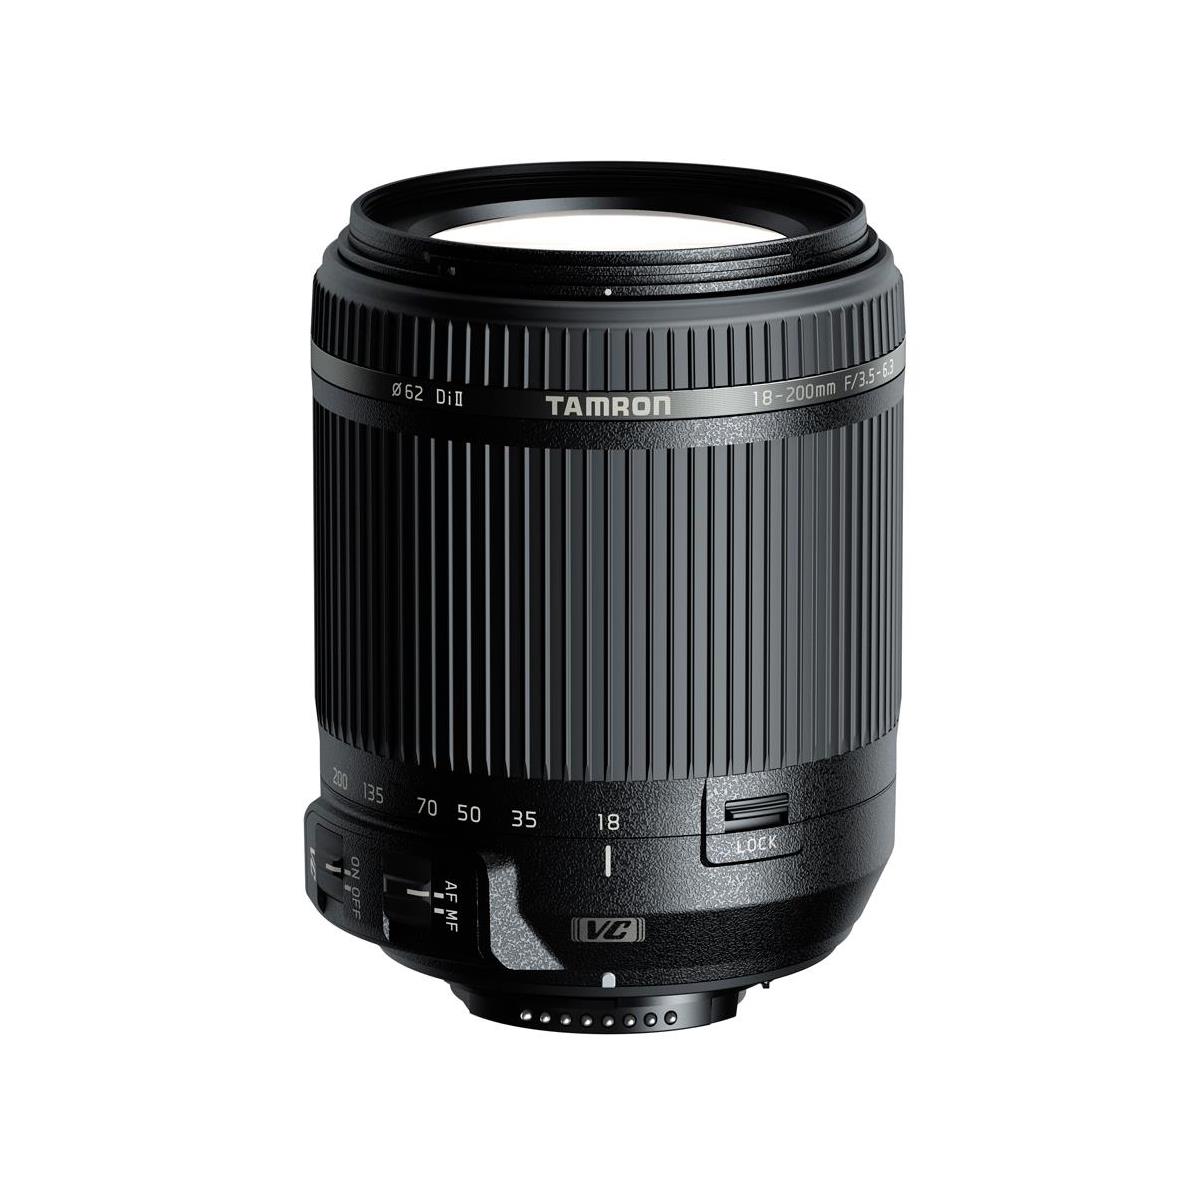 Image of Tamron 18-200mm f/3.5-6.3 Di II VC Lens for Nikon F